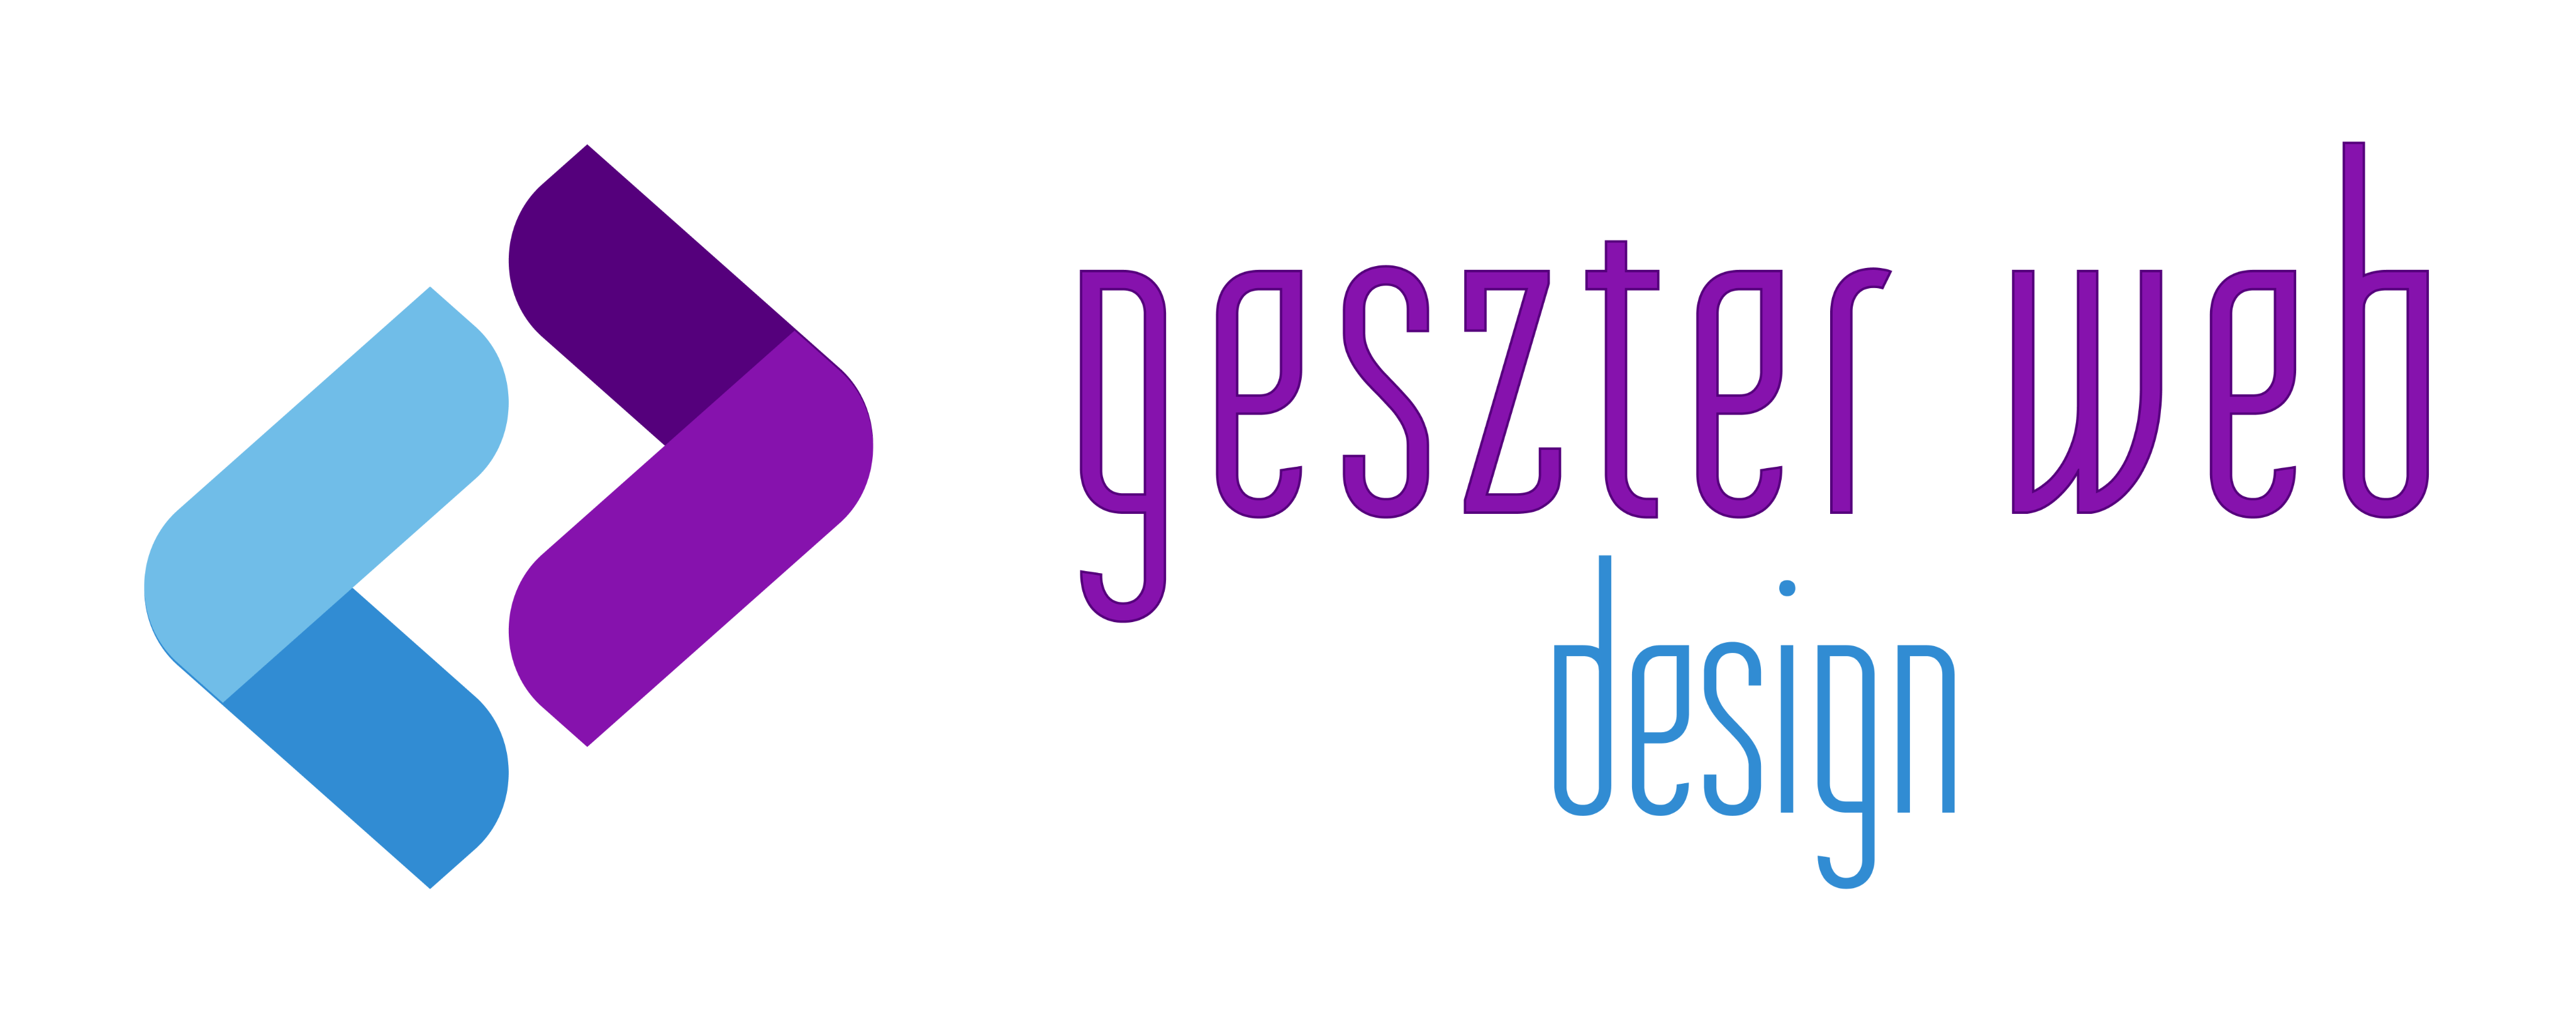 GeszterWeb logo